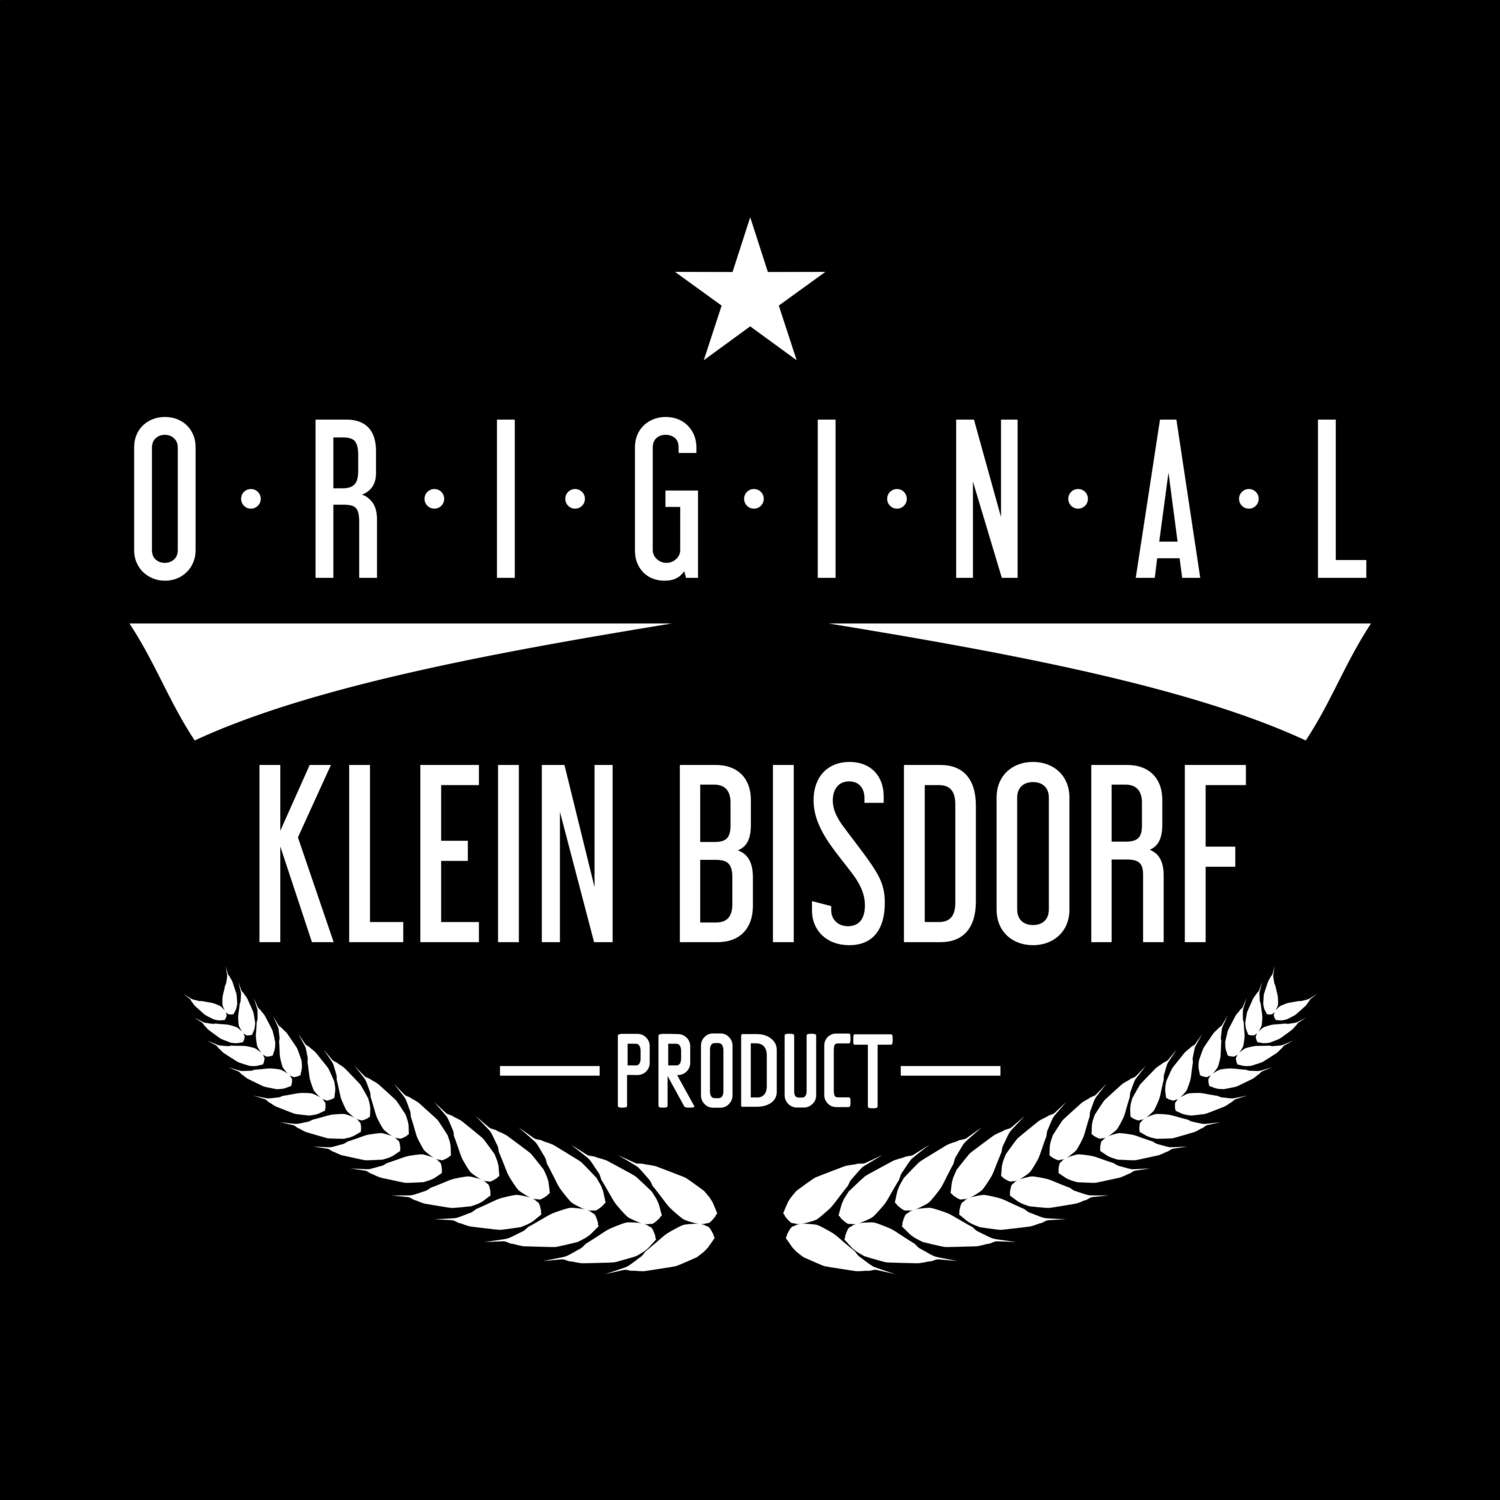 Klein Bisdorf T-Shirt »Original Product«